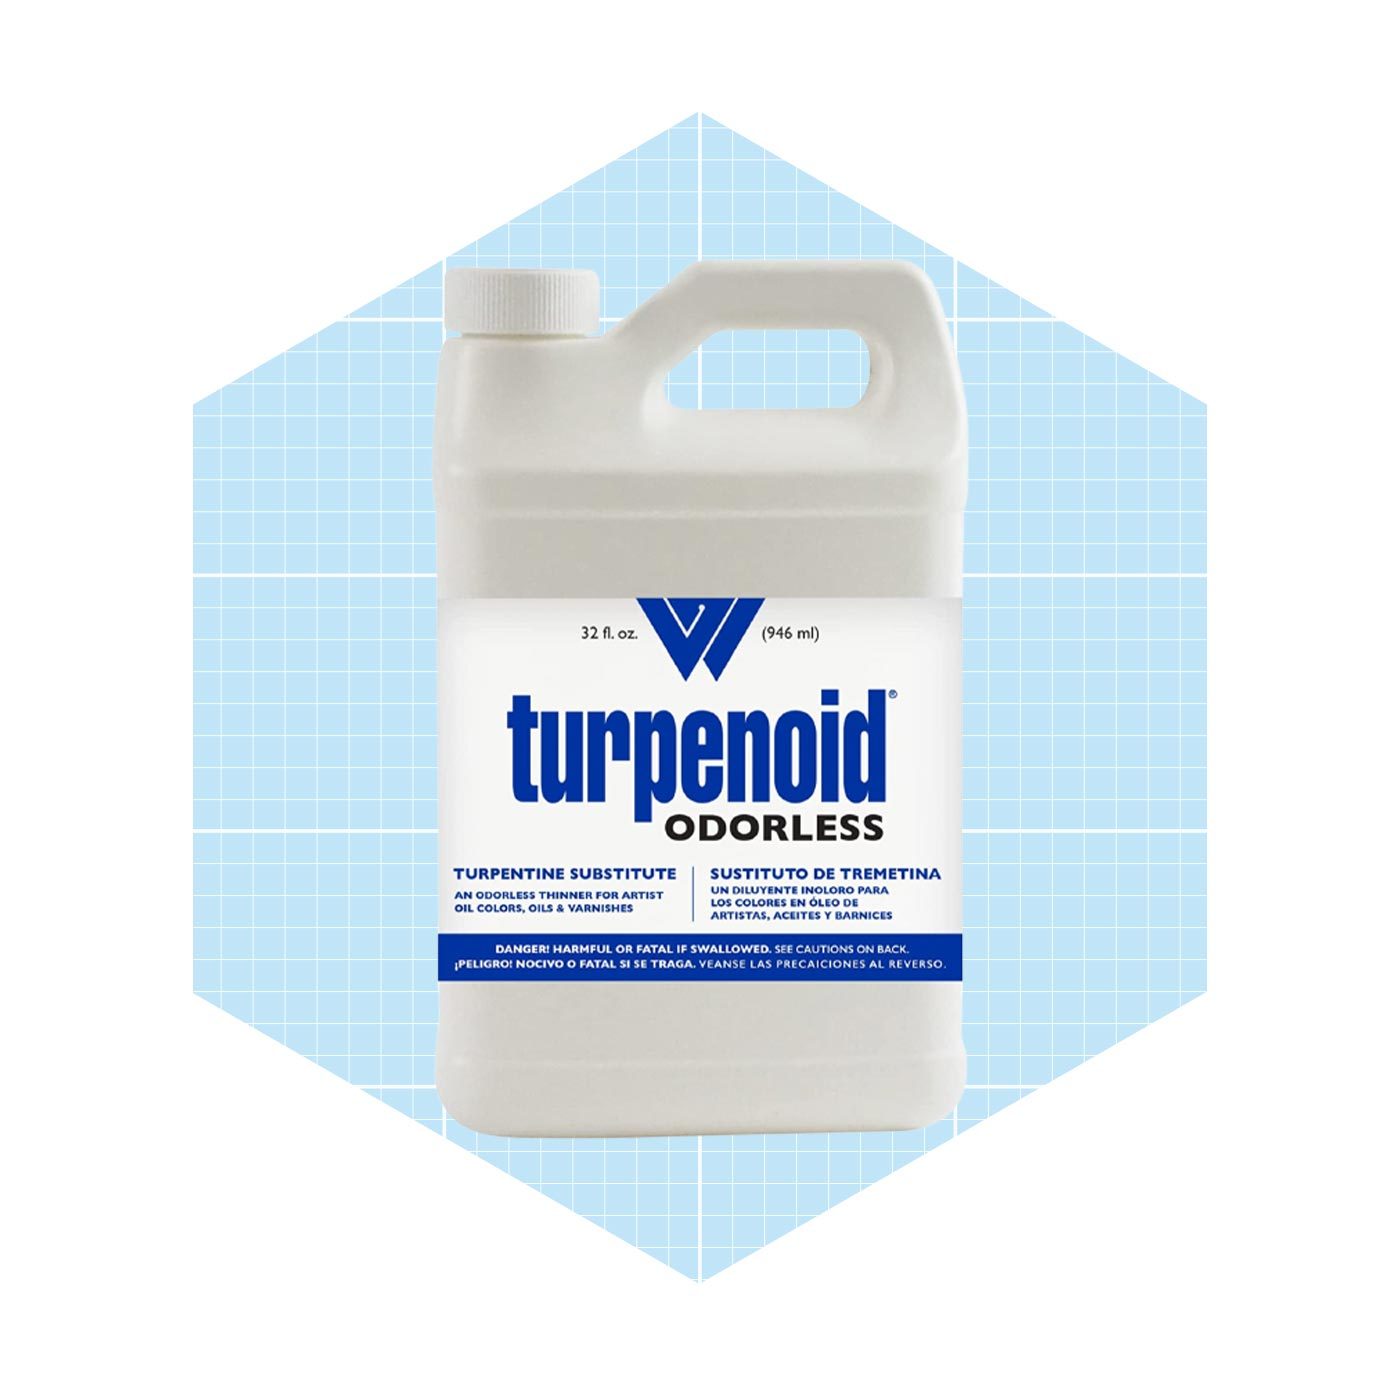 Sunnyside Pure Odorless Paint Thinner 1 Quart Odor-Free Quickly